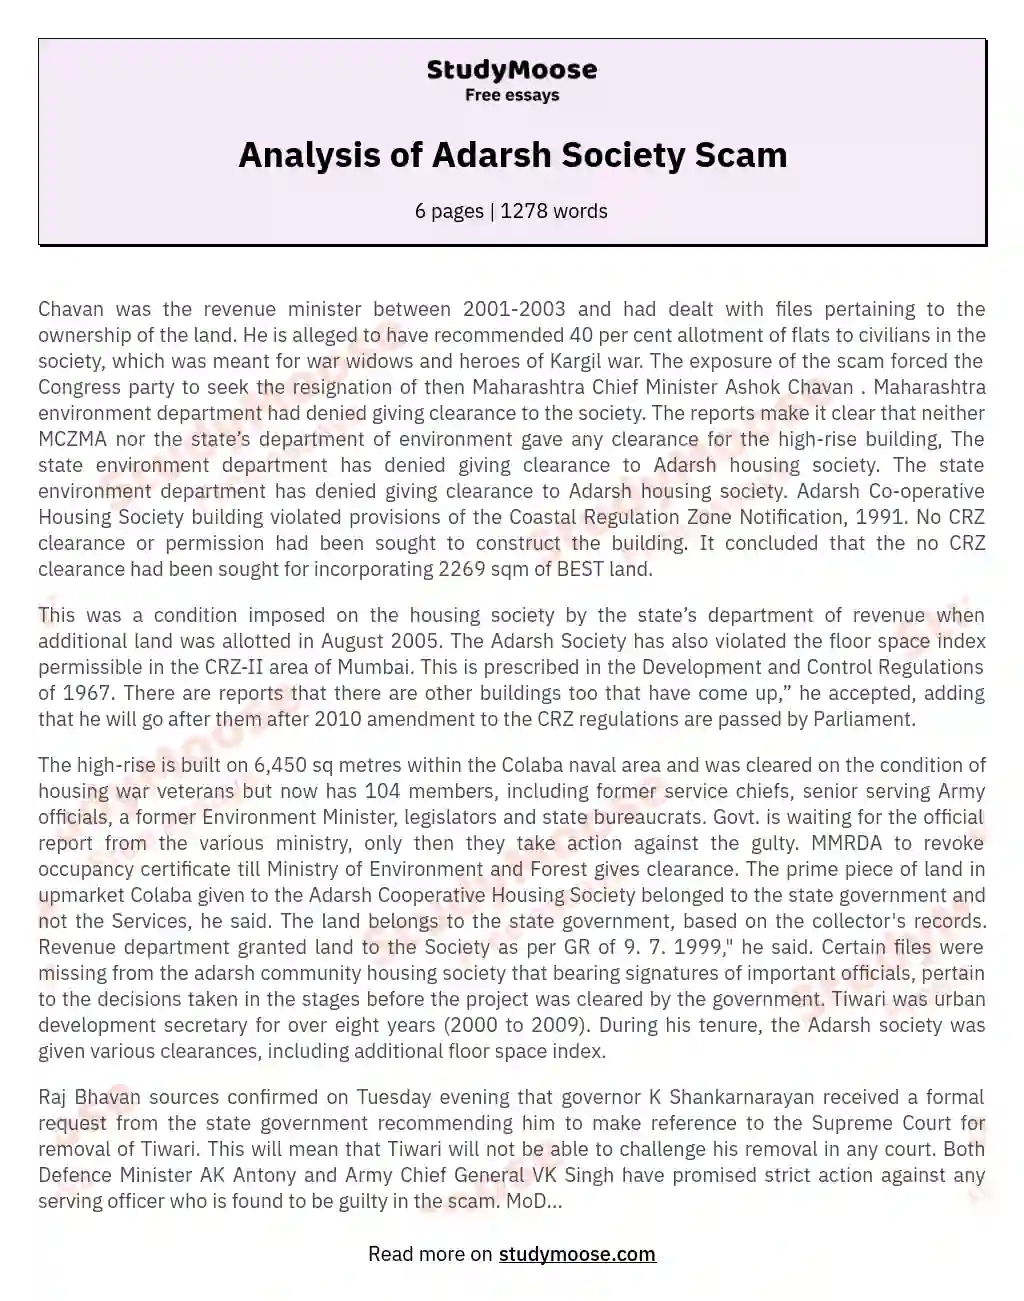 Analysis of Adarsh Society Scam essay